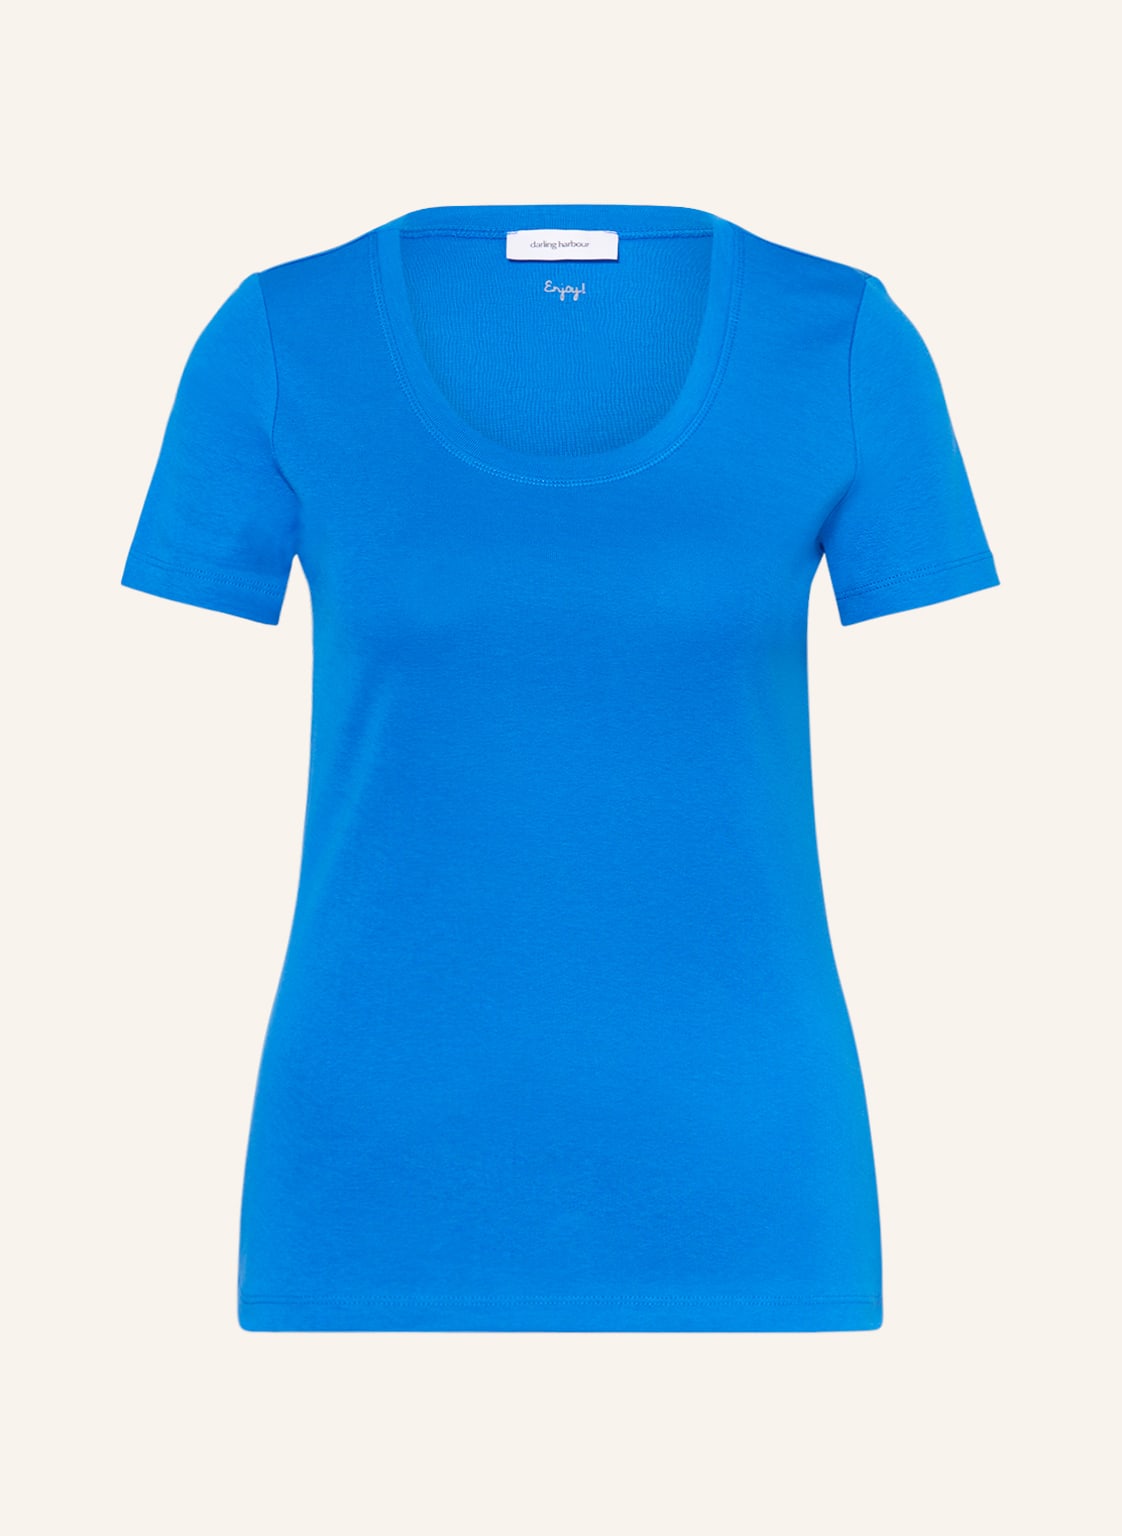 Darling Harbour T-Shirt blau von darling harbour